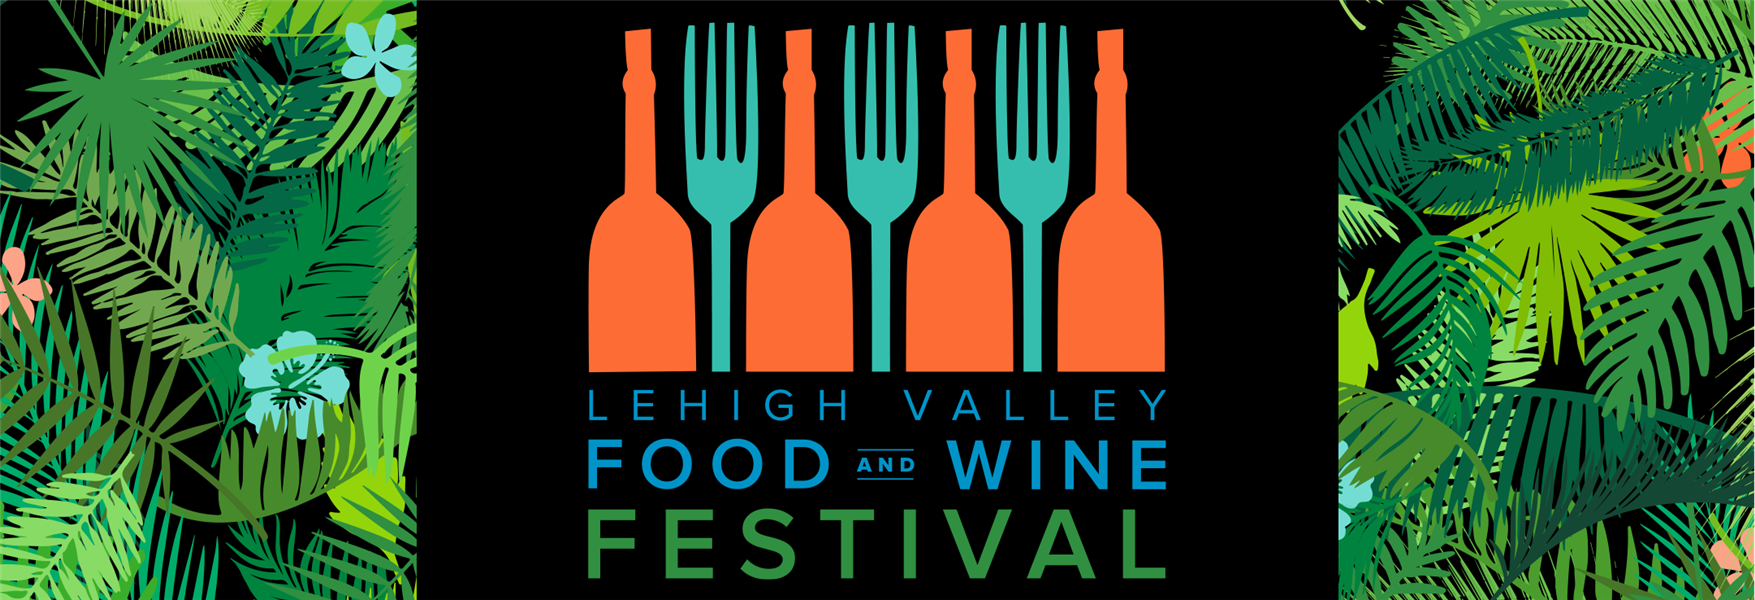 11th Annual Lehigh Valley Food & Wine Festival